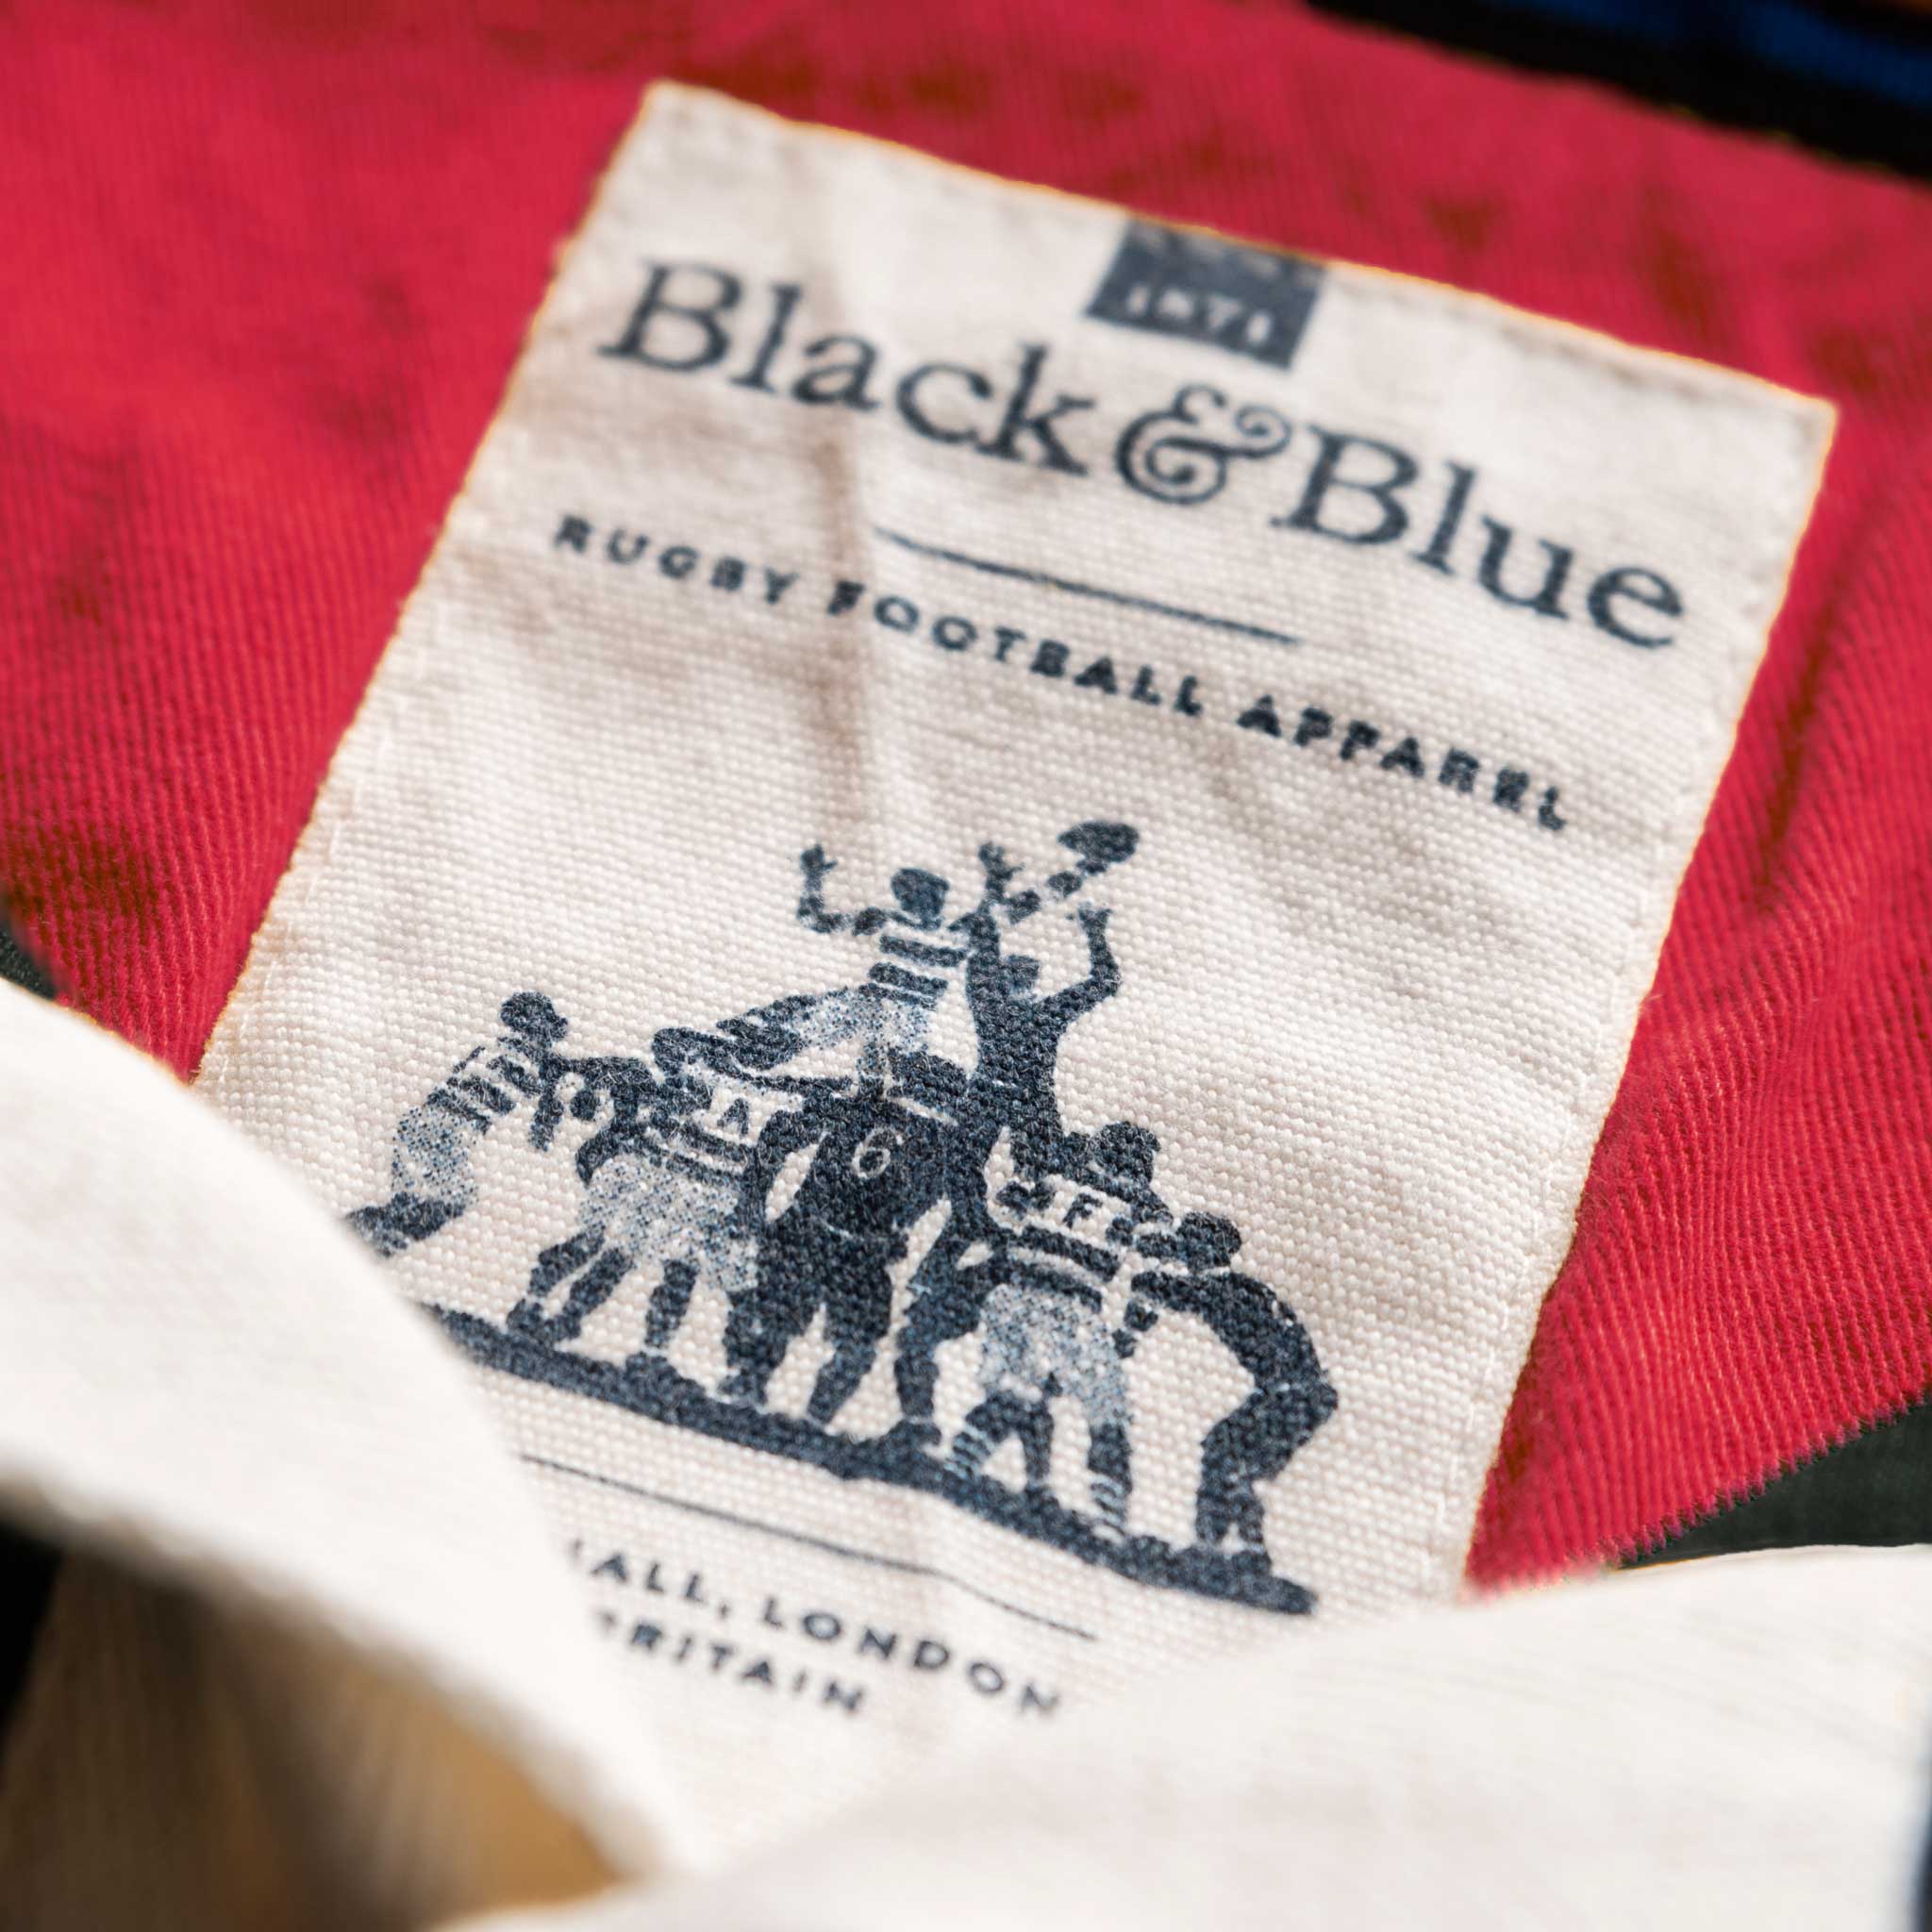 Wales 1881 Black Vintage Rugby Shirt_BB Label